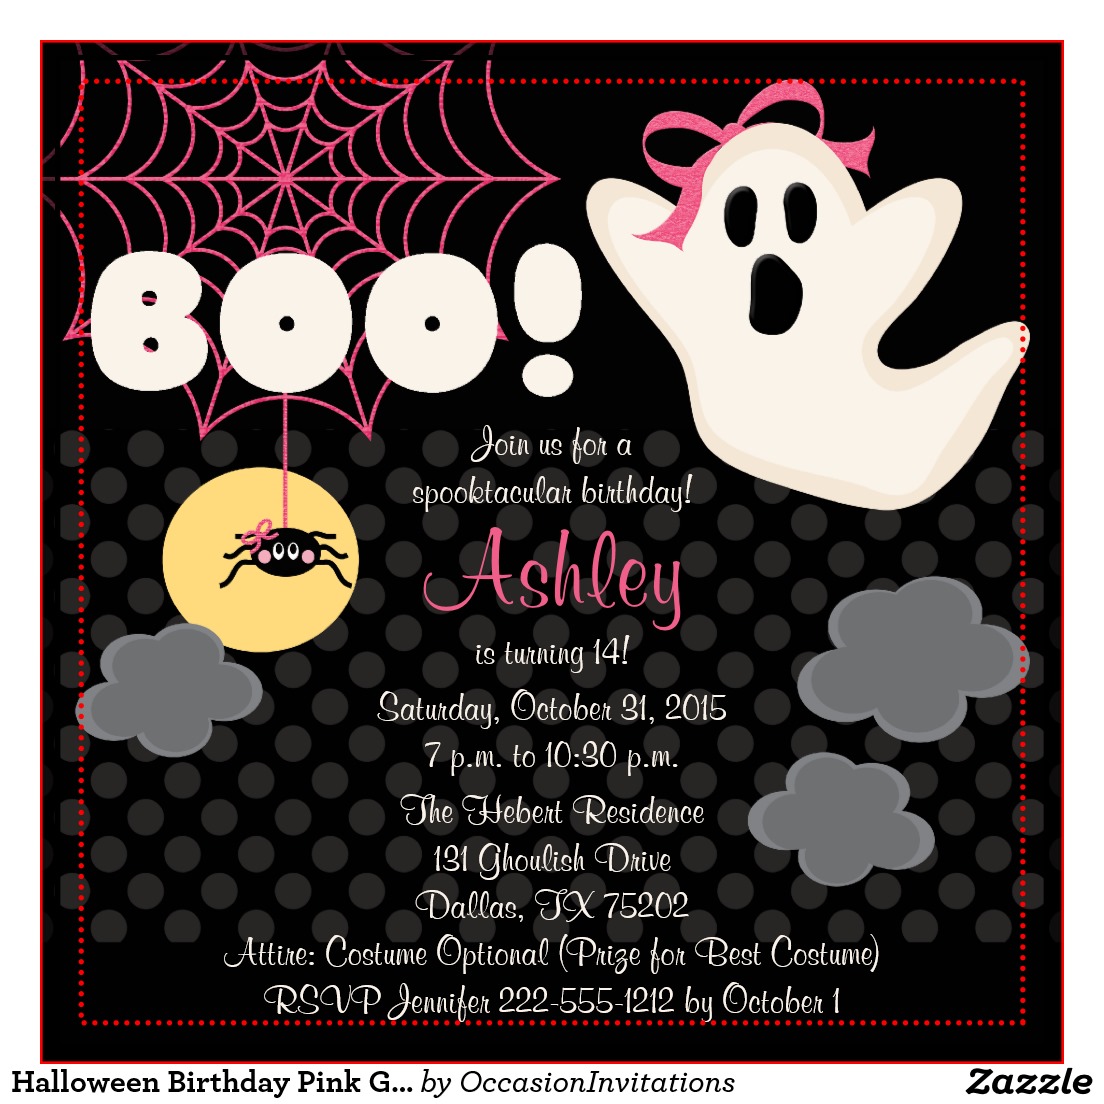 Halloween Themed Birthday Party Invitations | Dolanpedia